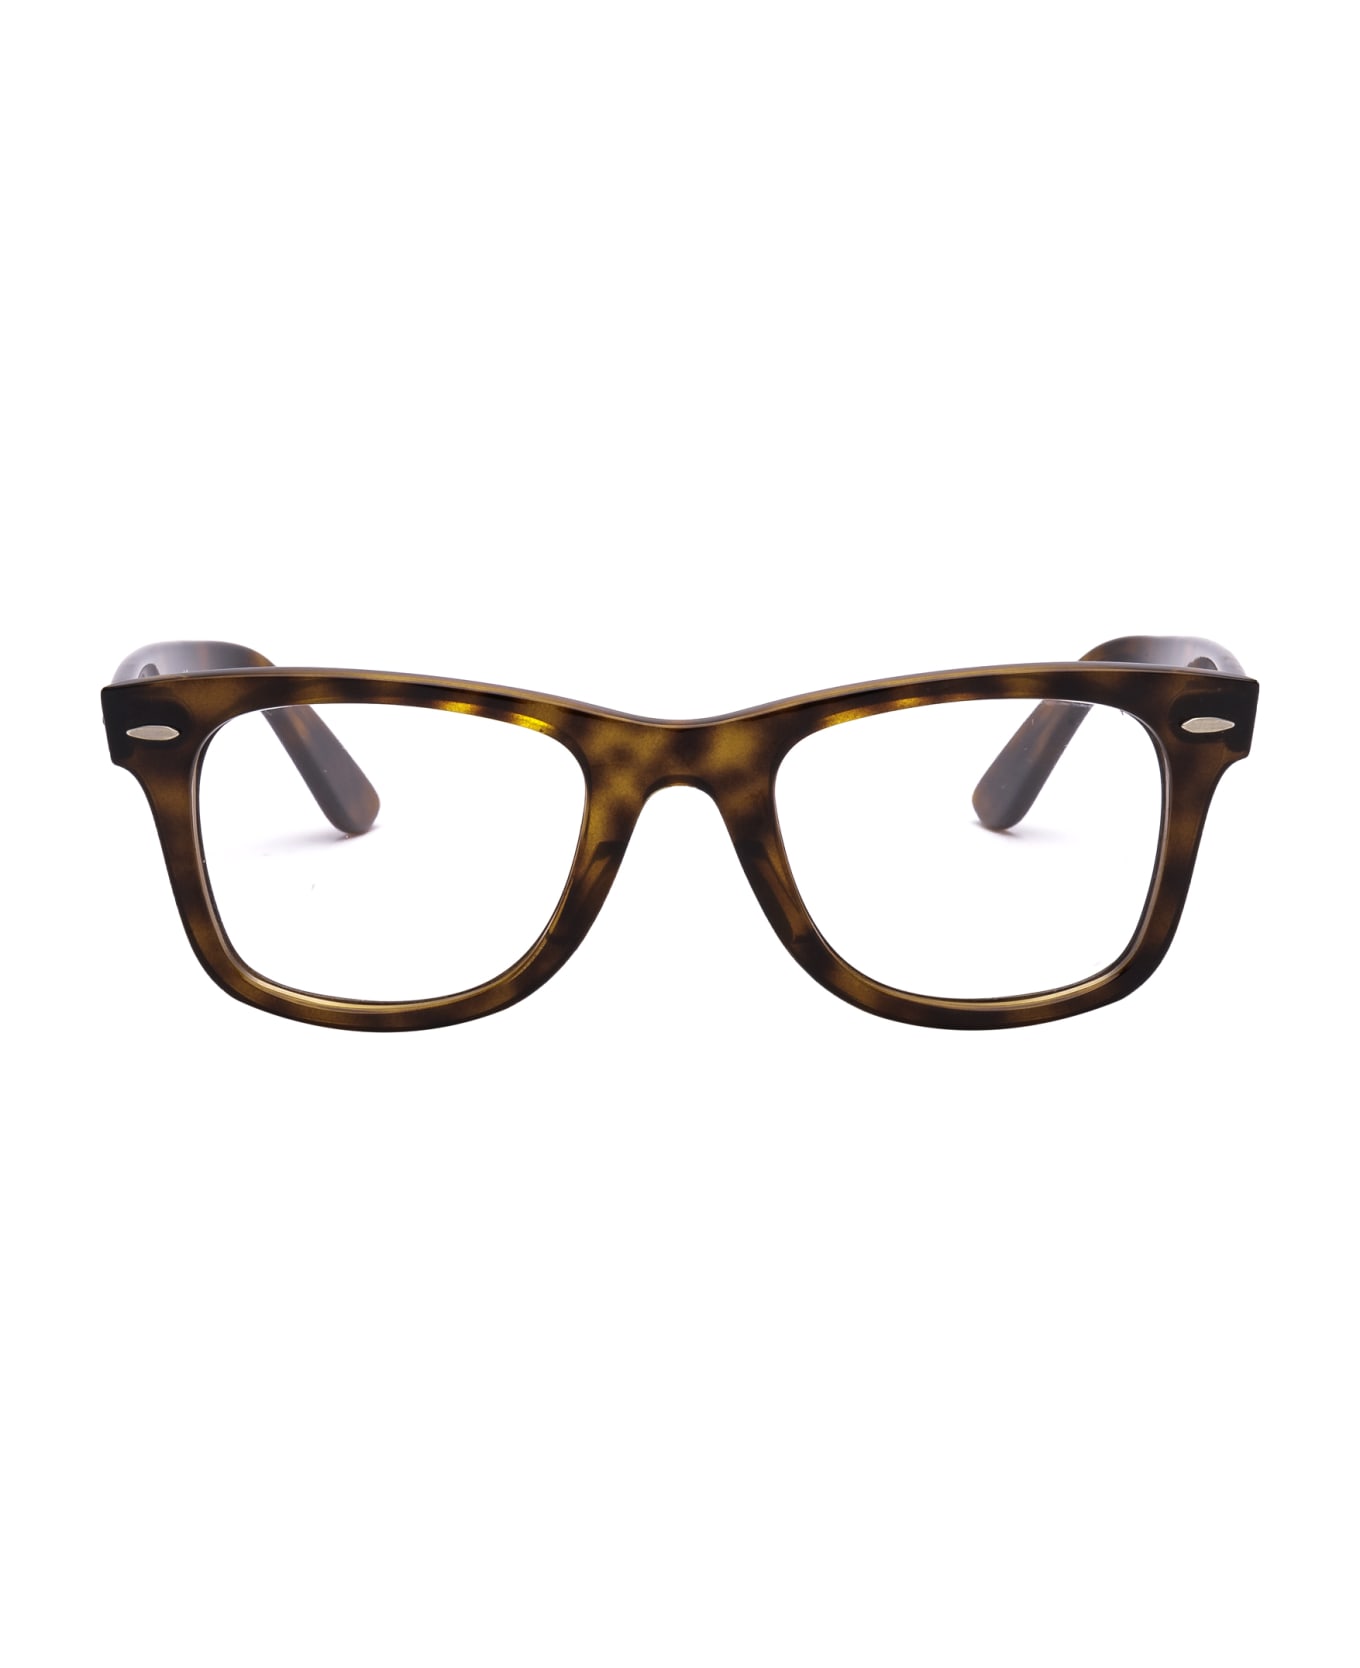 Ray-Ban Wayfarer Ease Glasses - 2012 HAVANA アイウェア